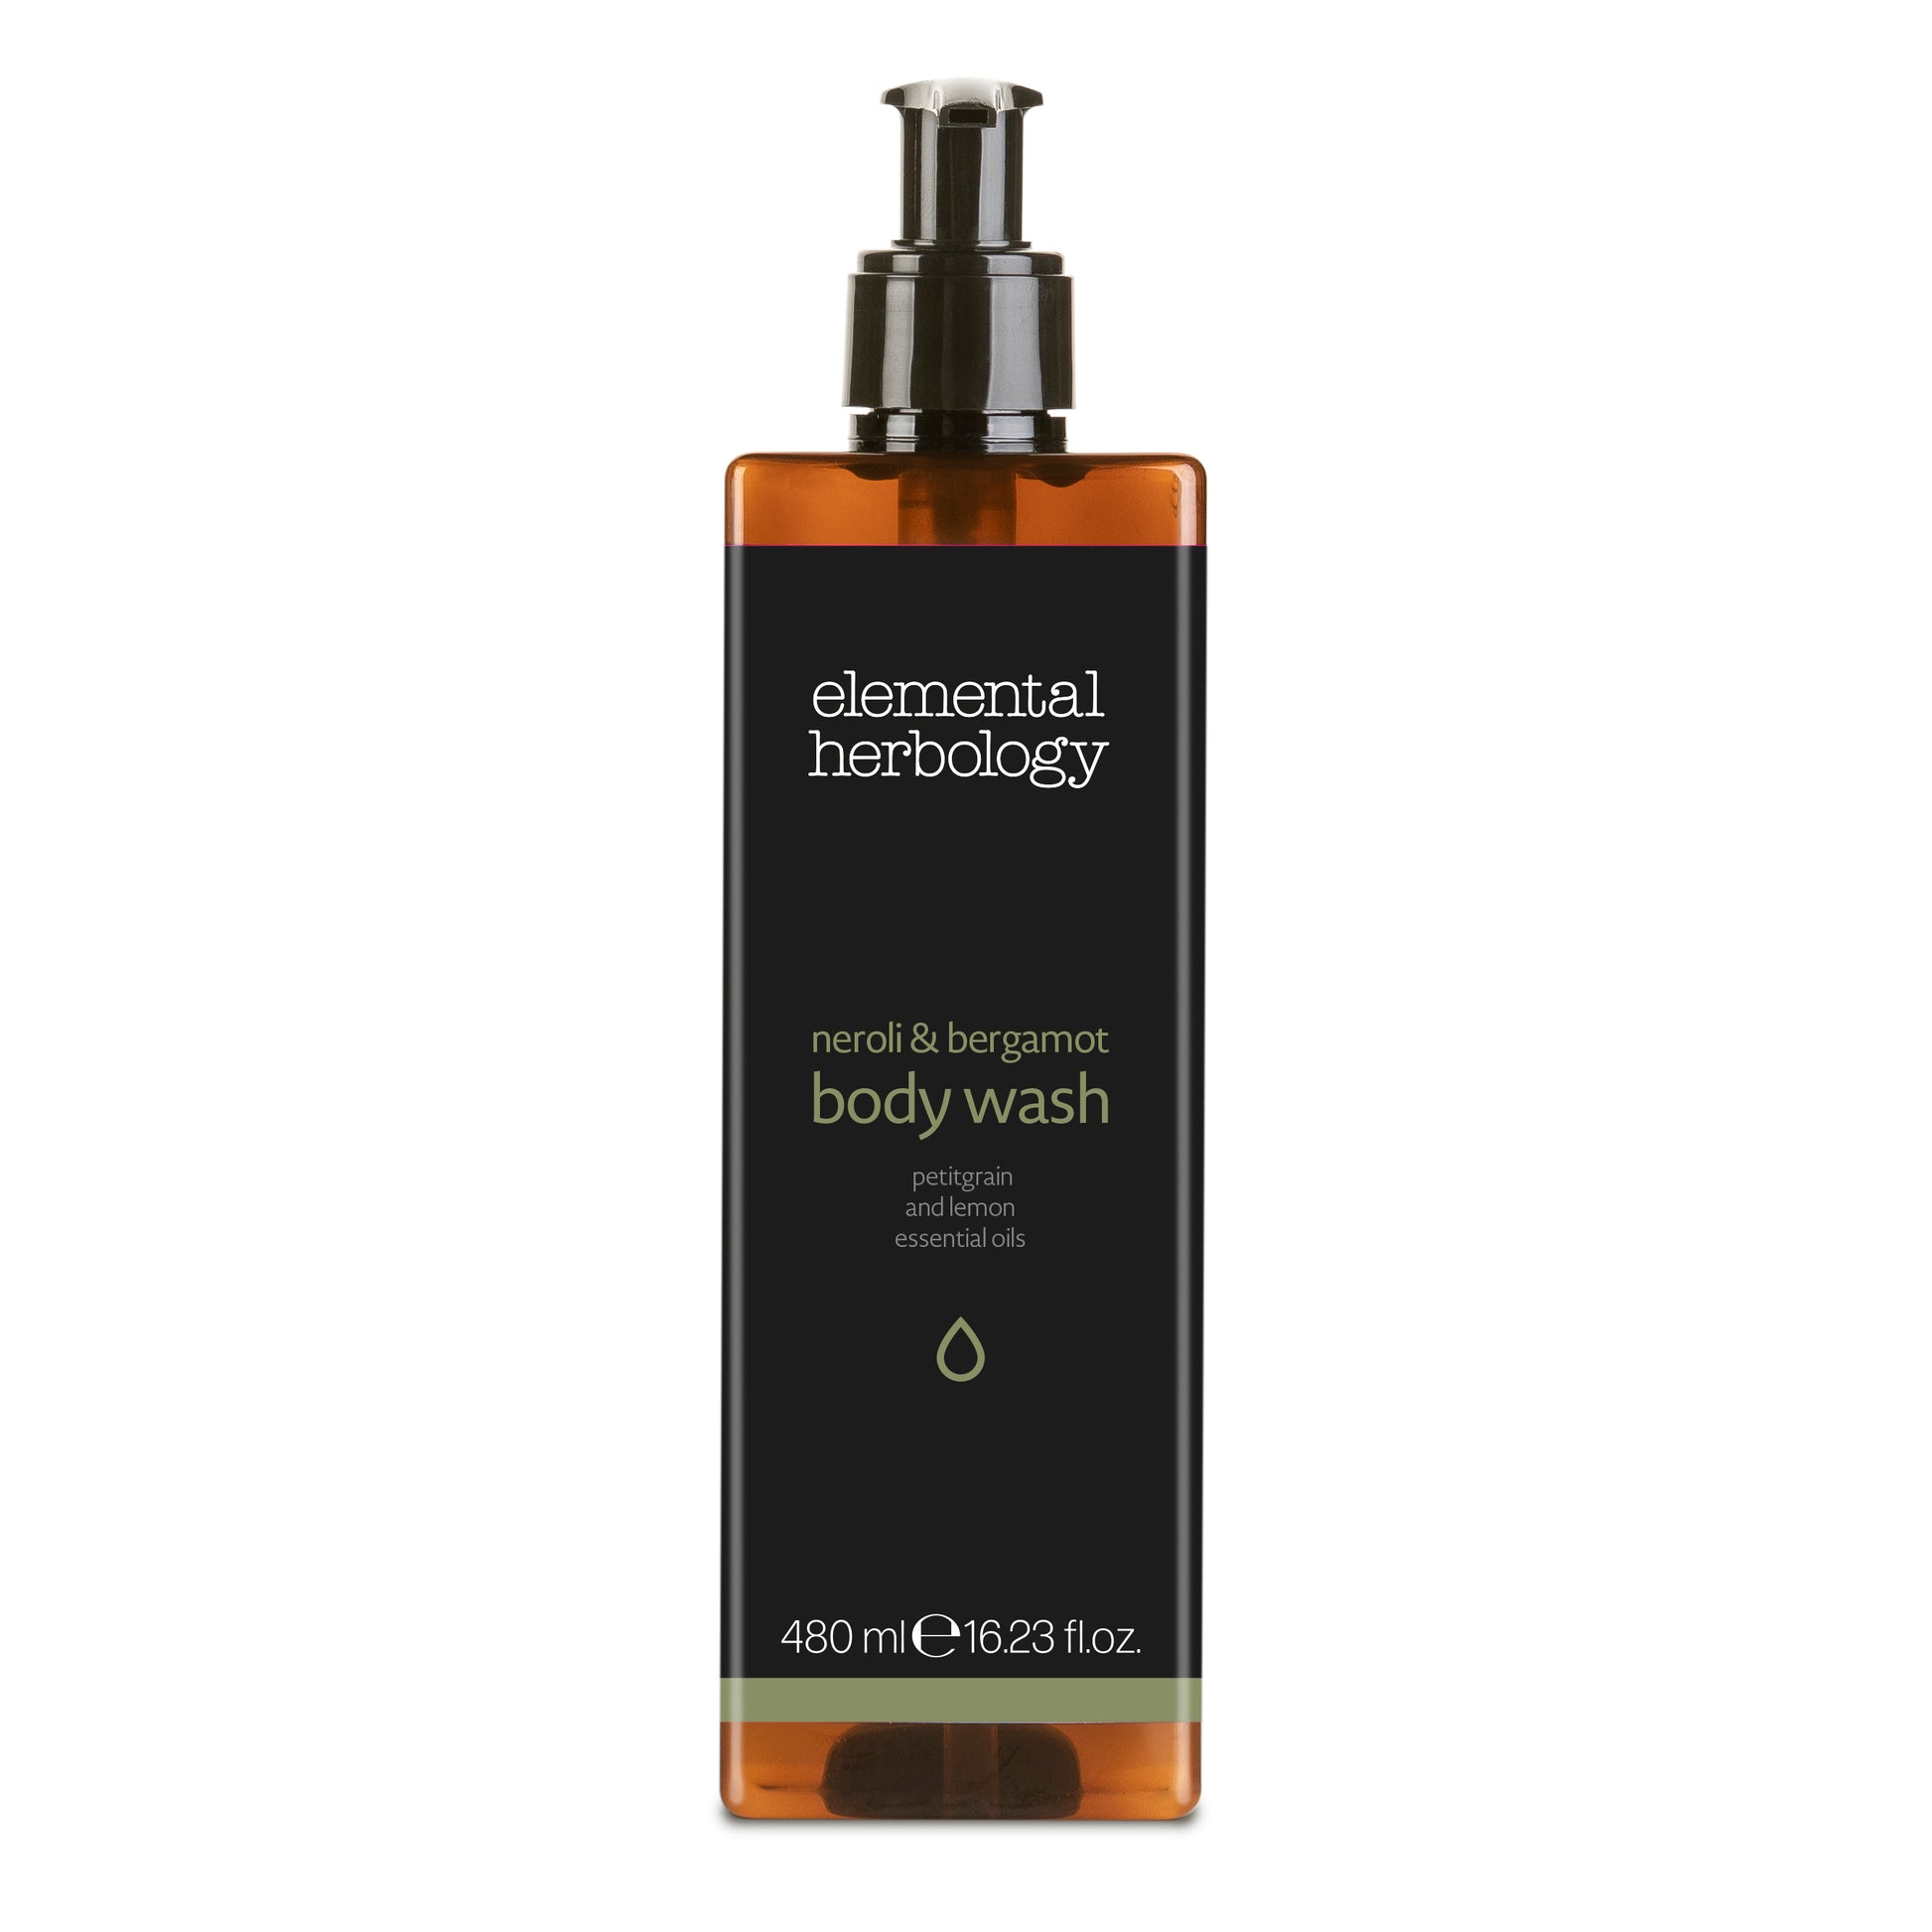 Elemental Herbology neroli and bergamot body wash in 480ml pump dispenser bottle